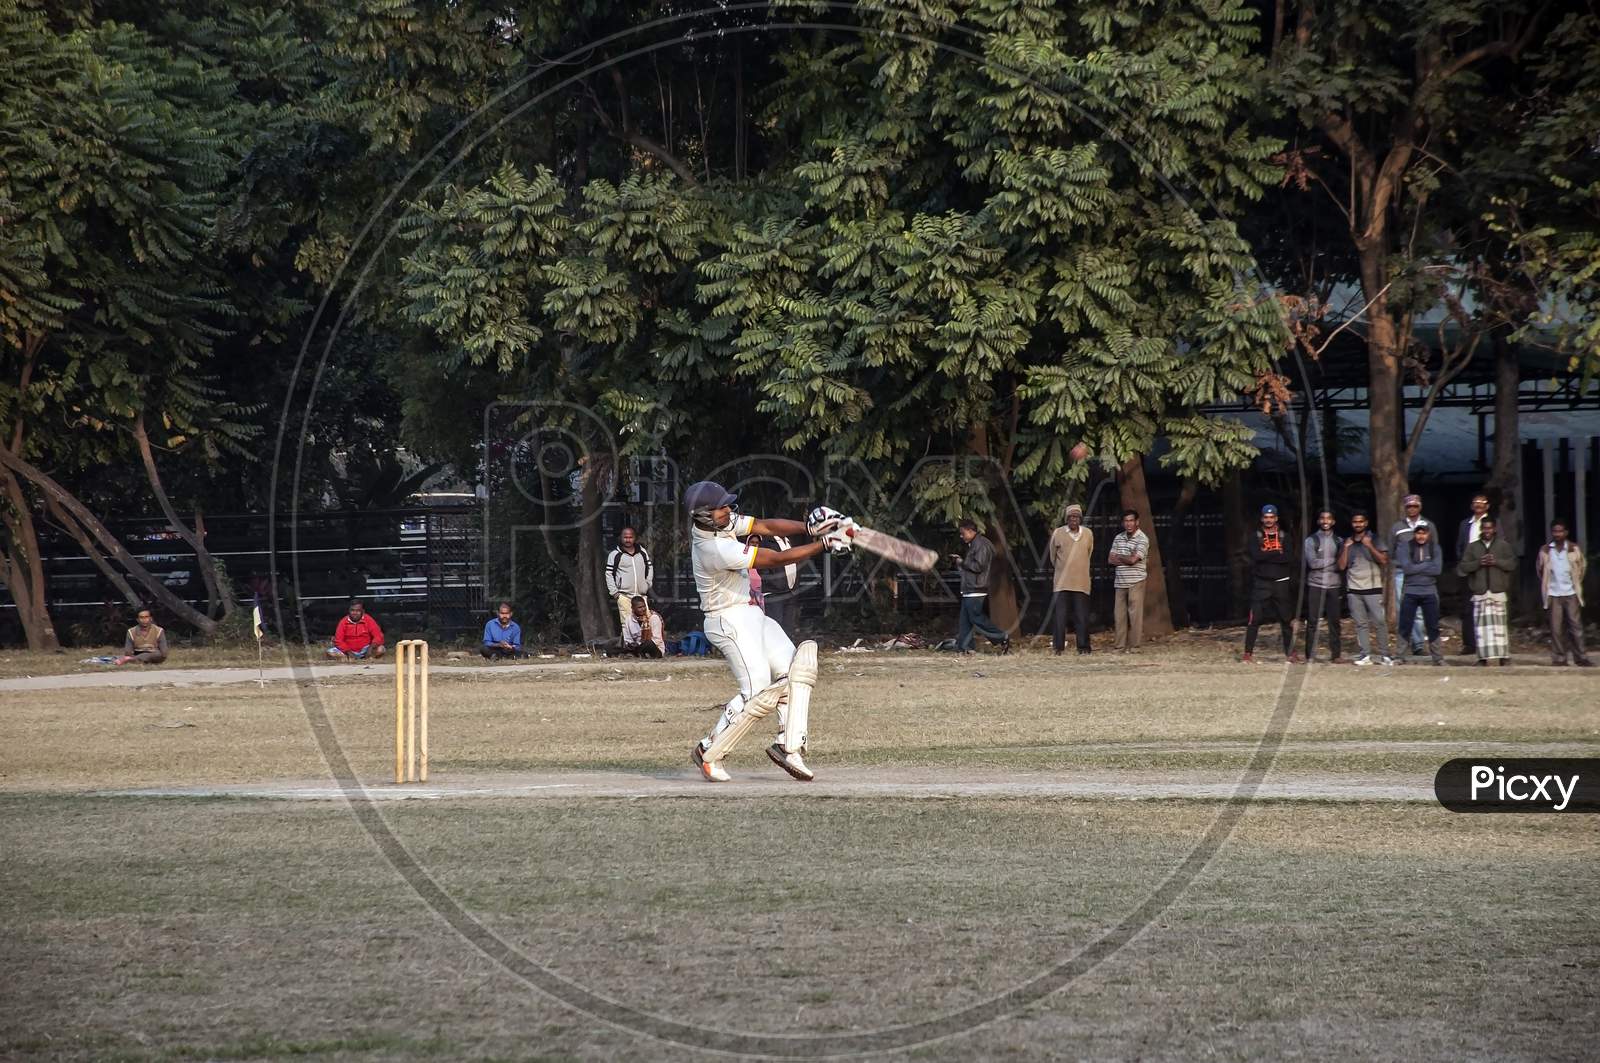 The Cricket batsman in action.